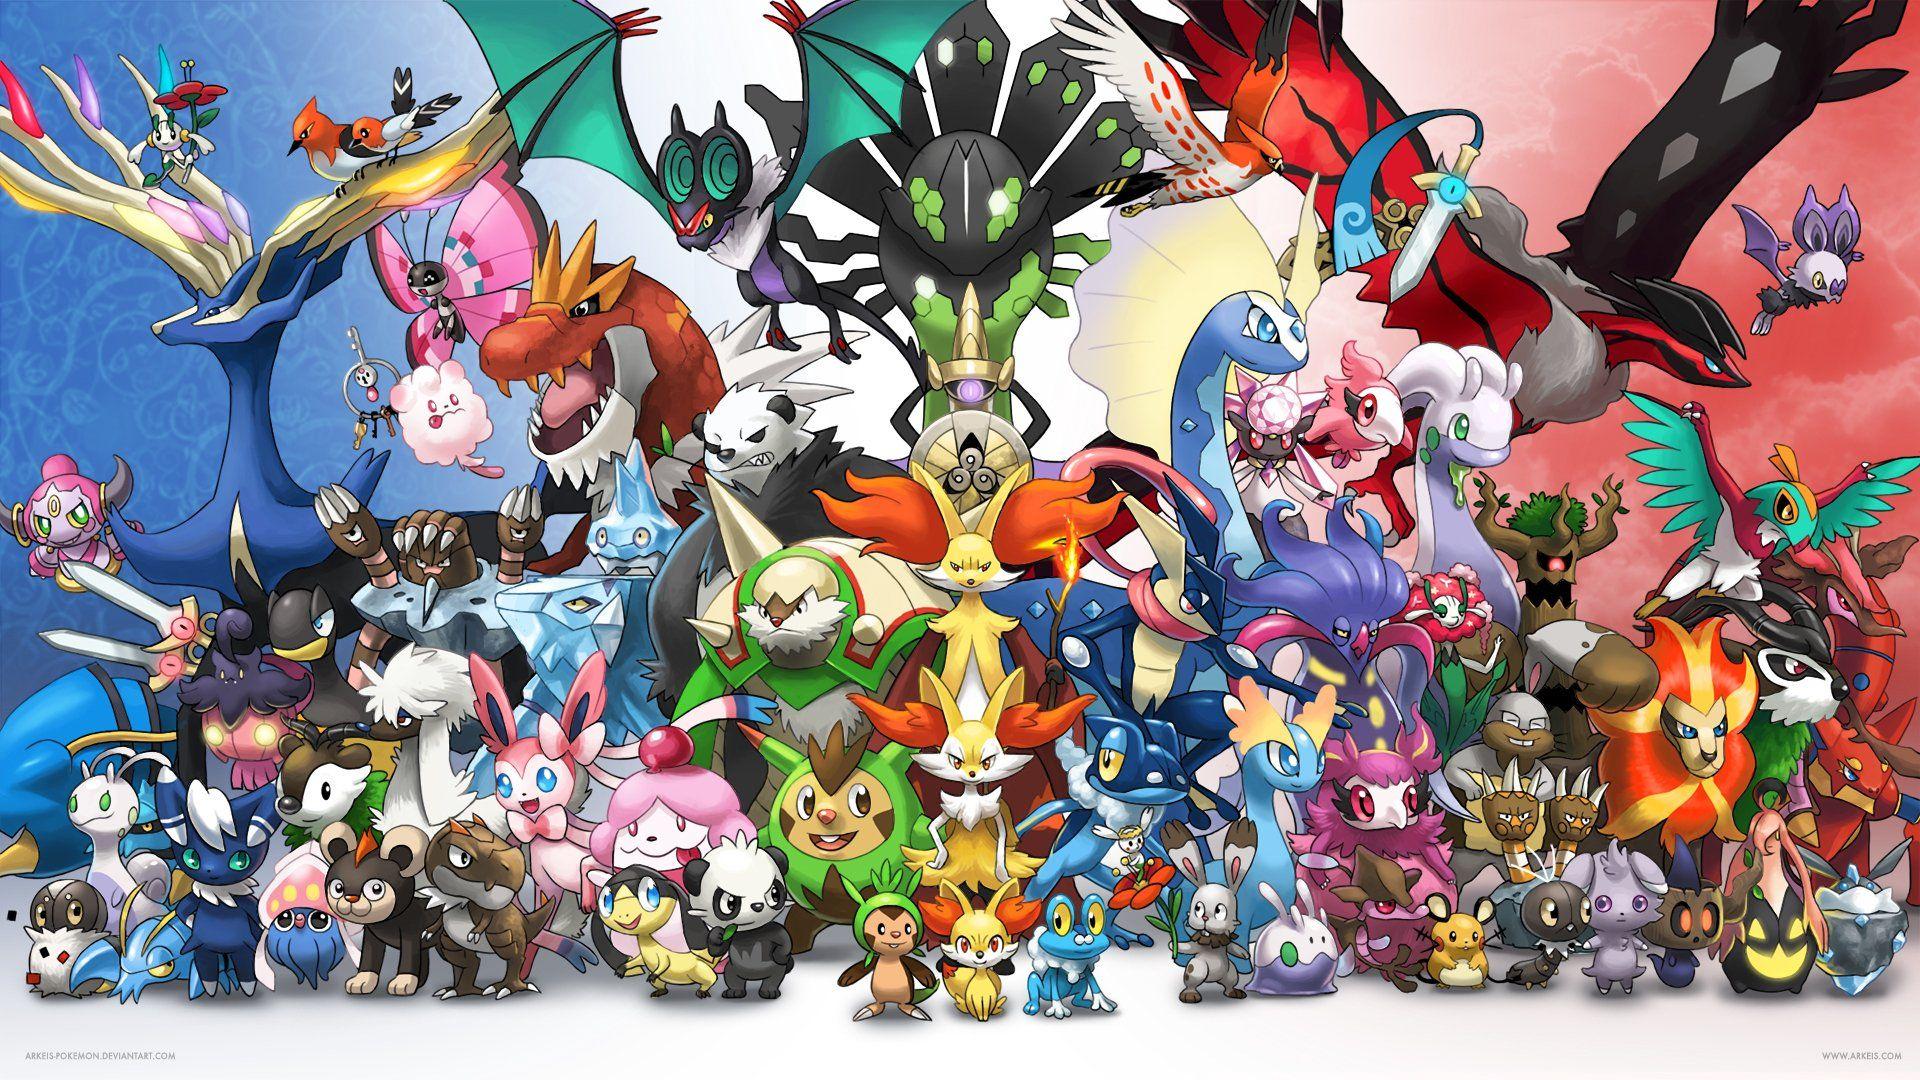 Yveltal (Pokémon) HD Wallpaper and Background Image